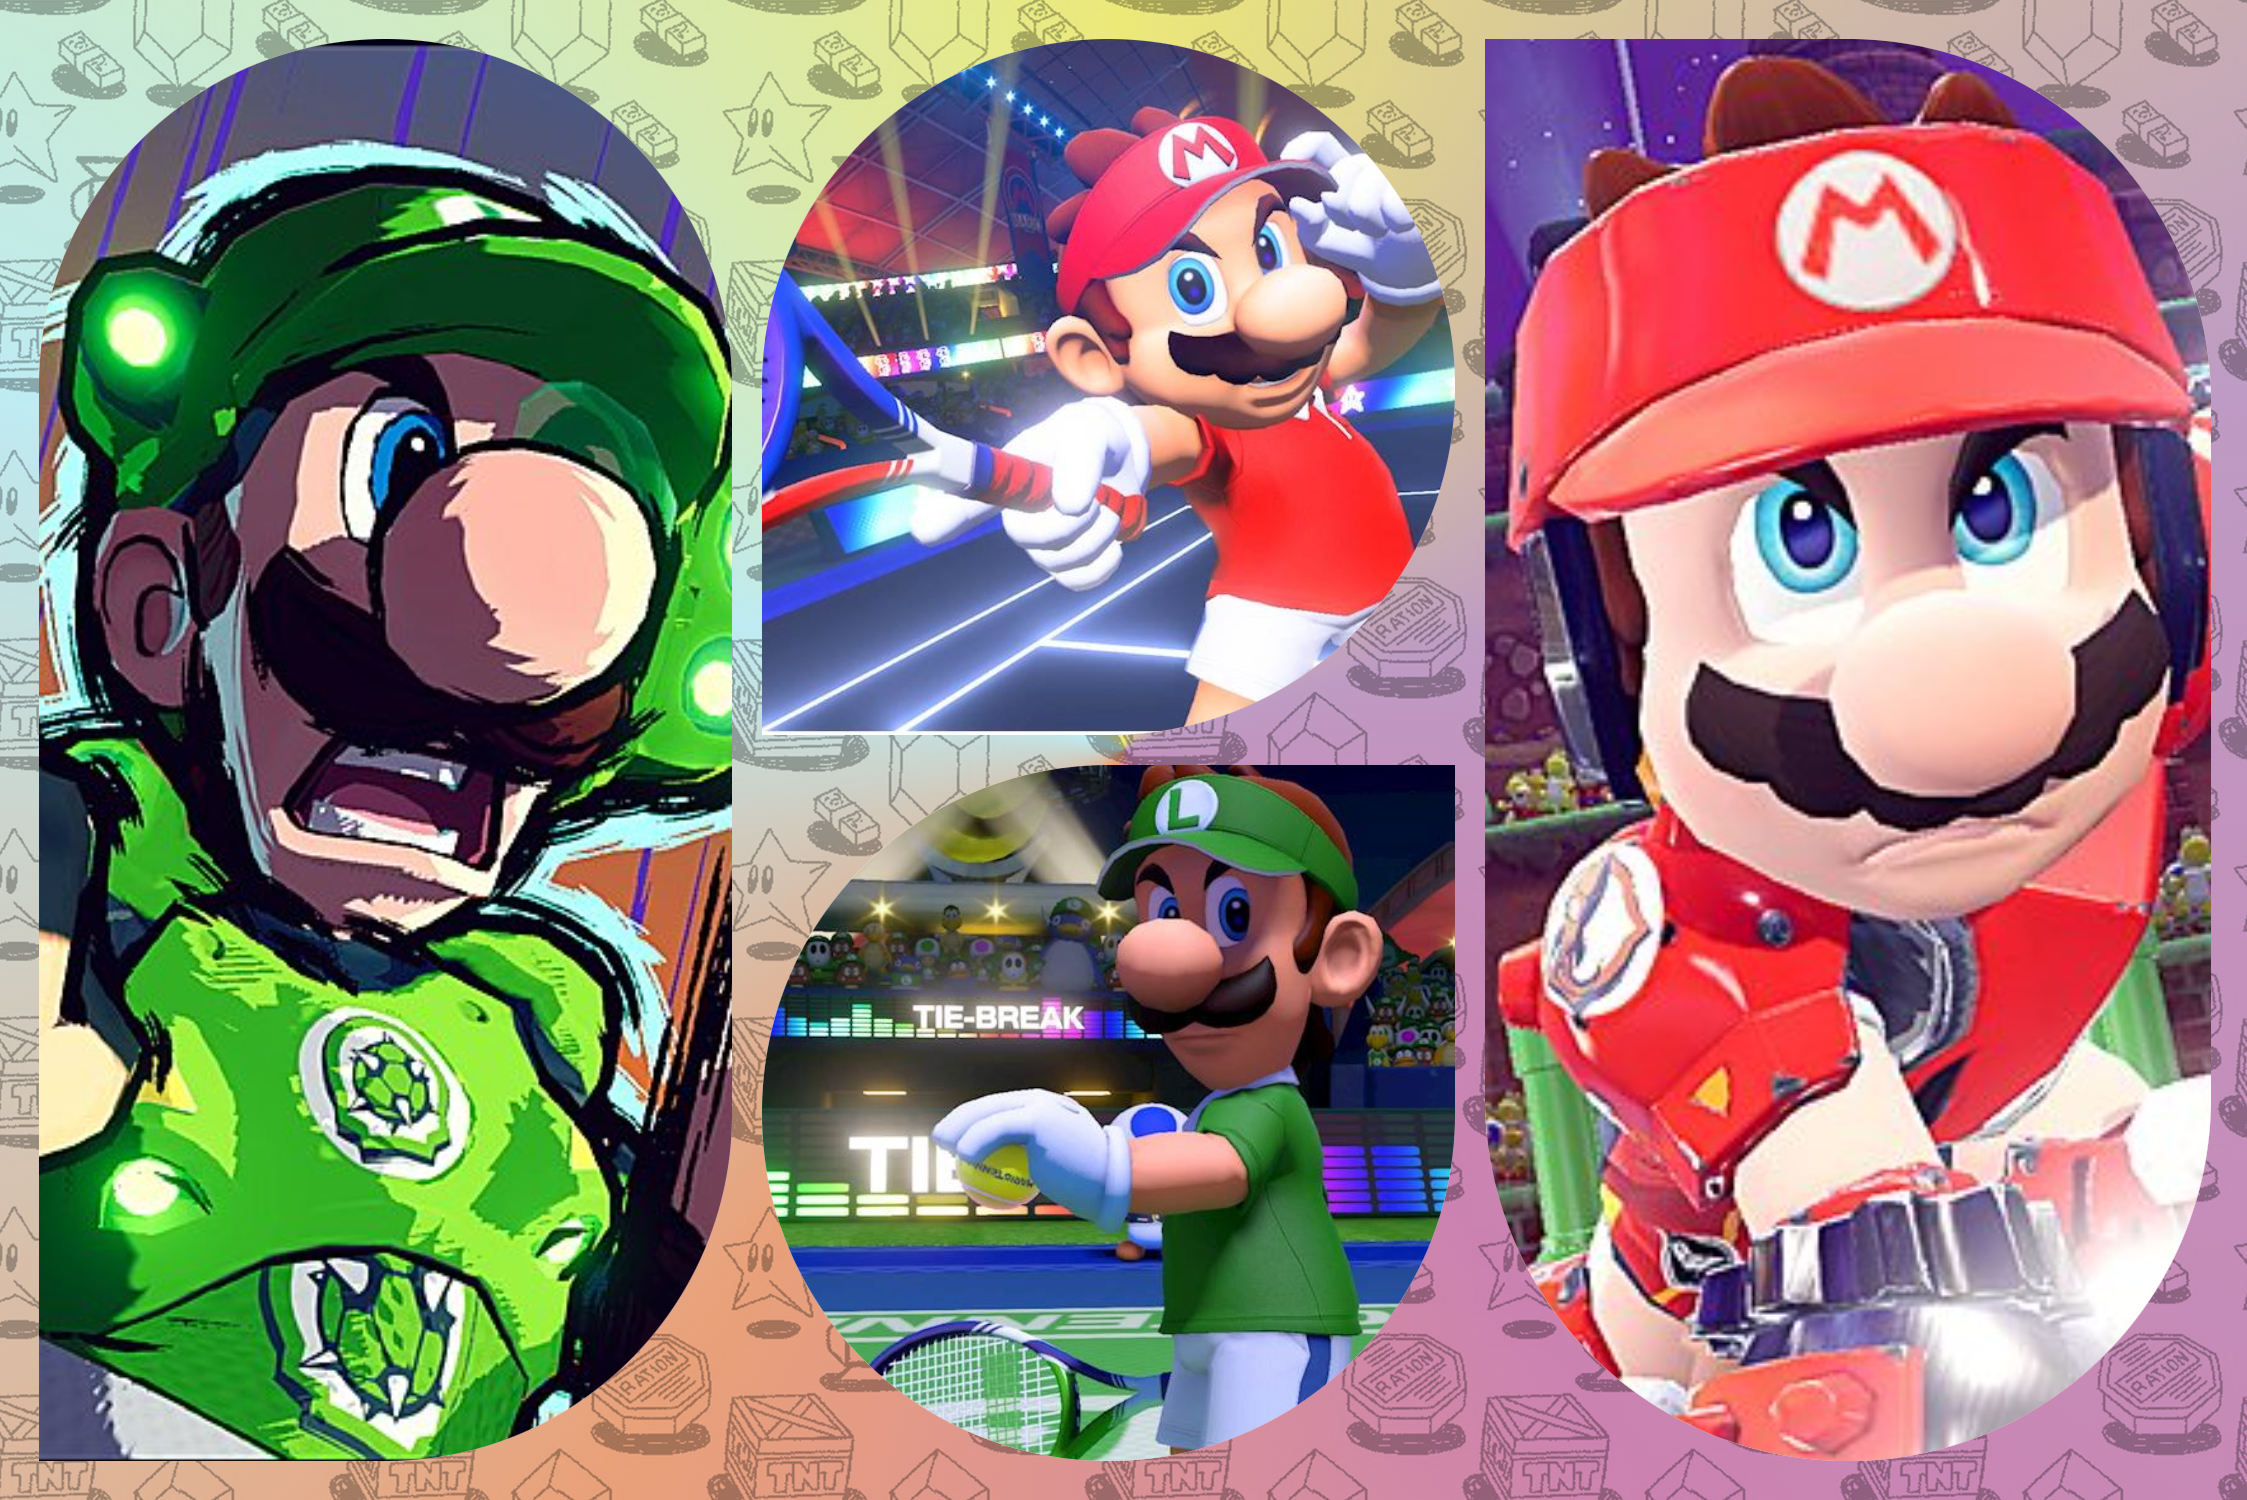 Mario vs. Luigi in tennis and soccer